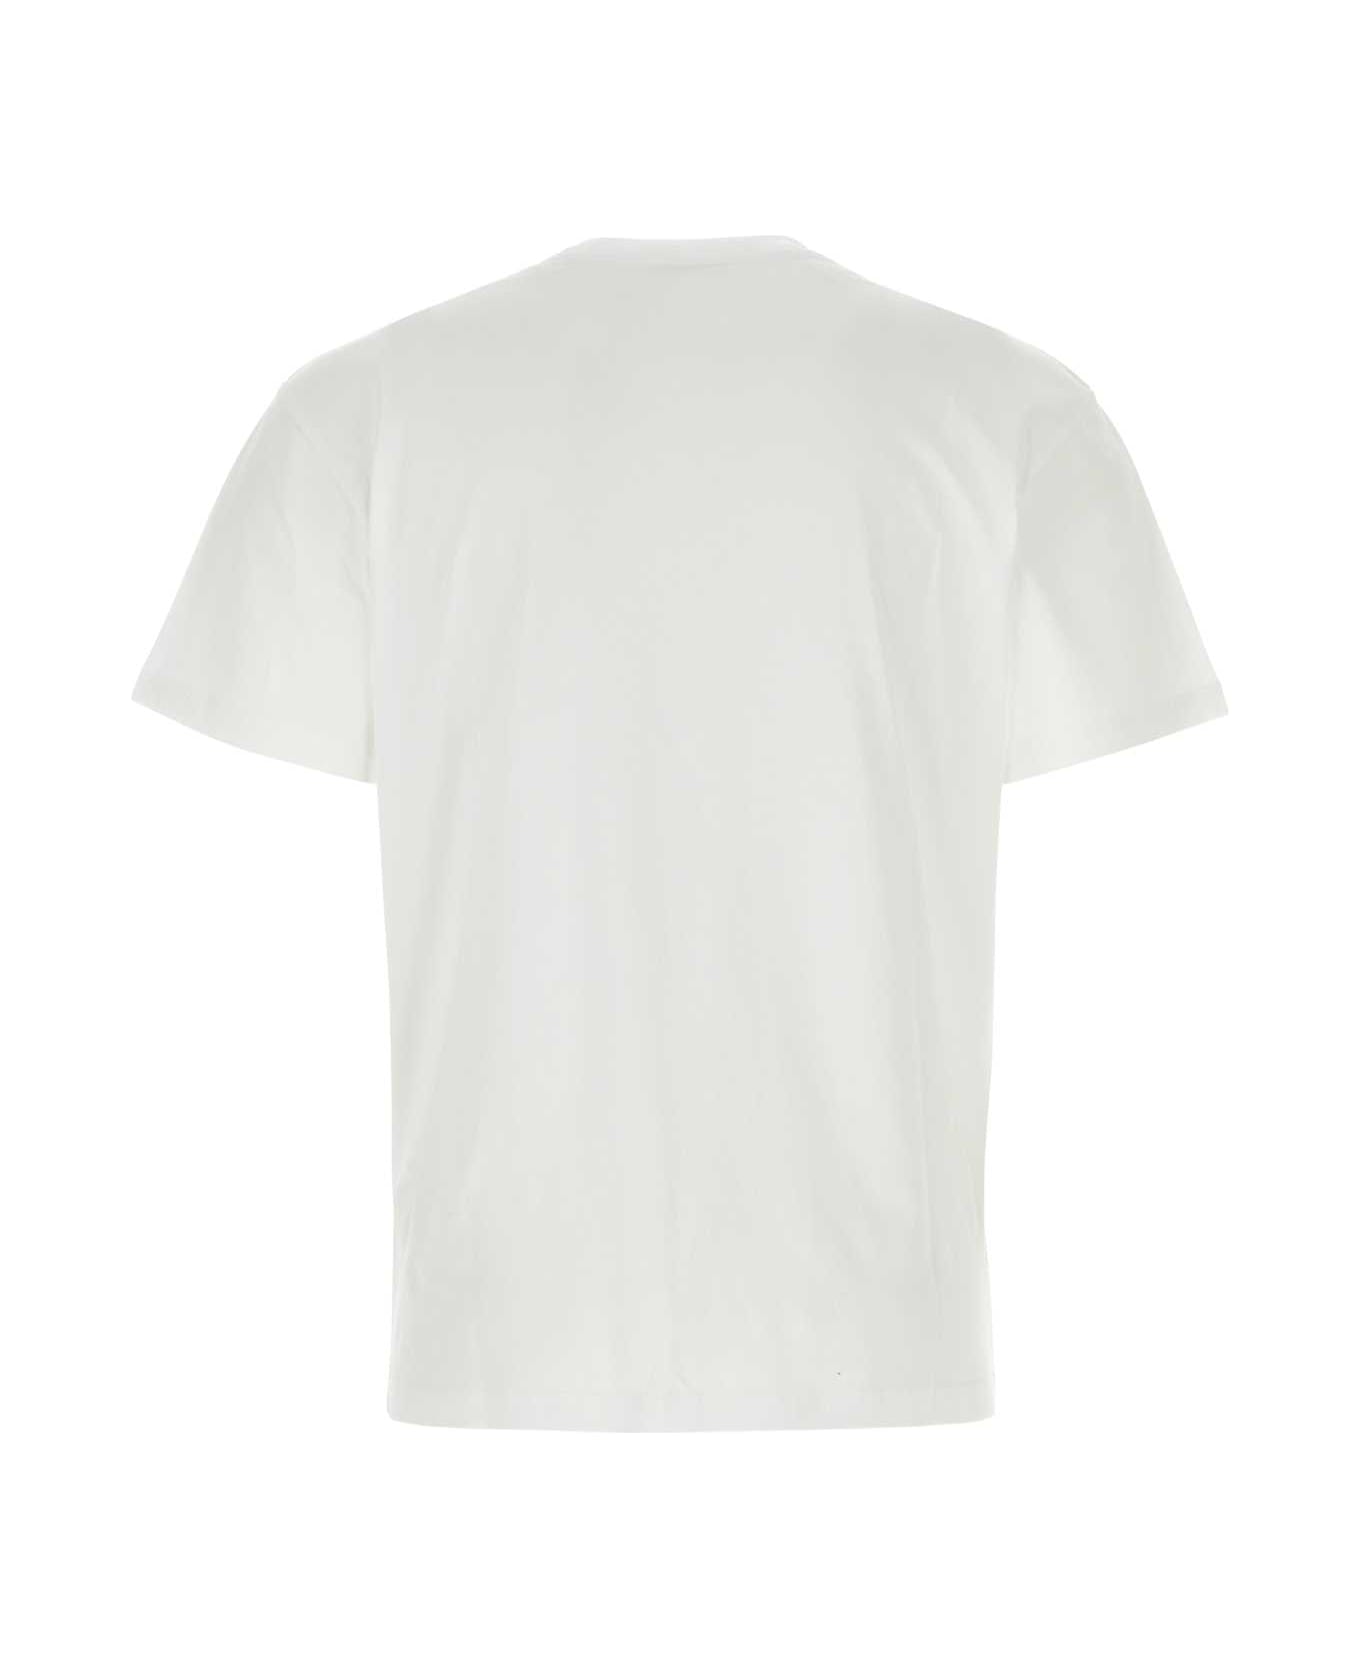 J.W. Anderson White Cotton T-shirt - White